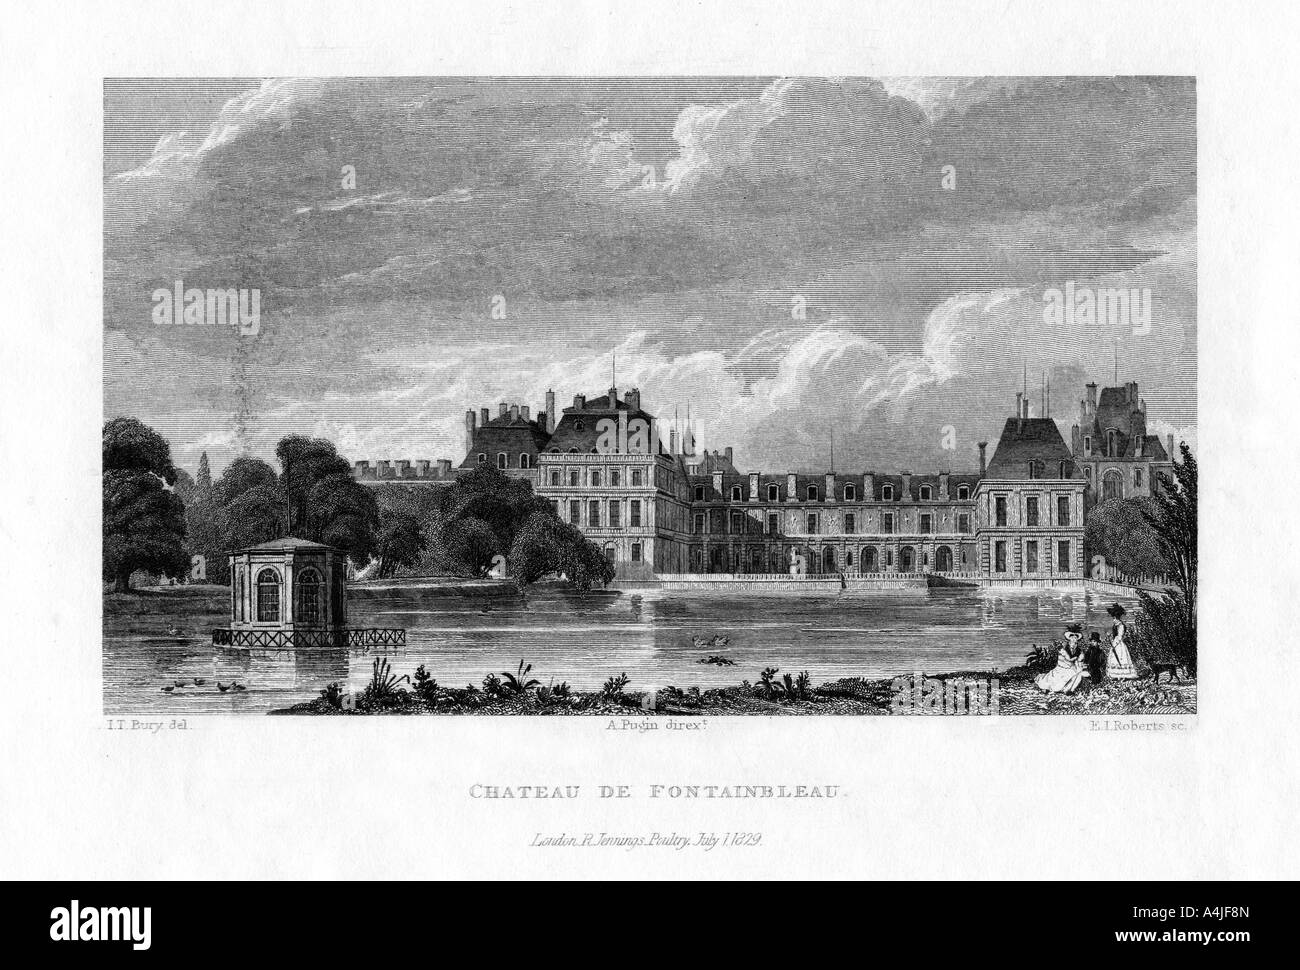 Château de Fontainebleau, Frankreich, 1829 Künstler: E ICH Roberts Stockfoto